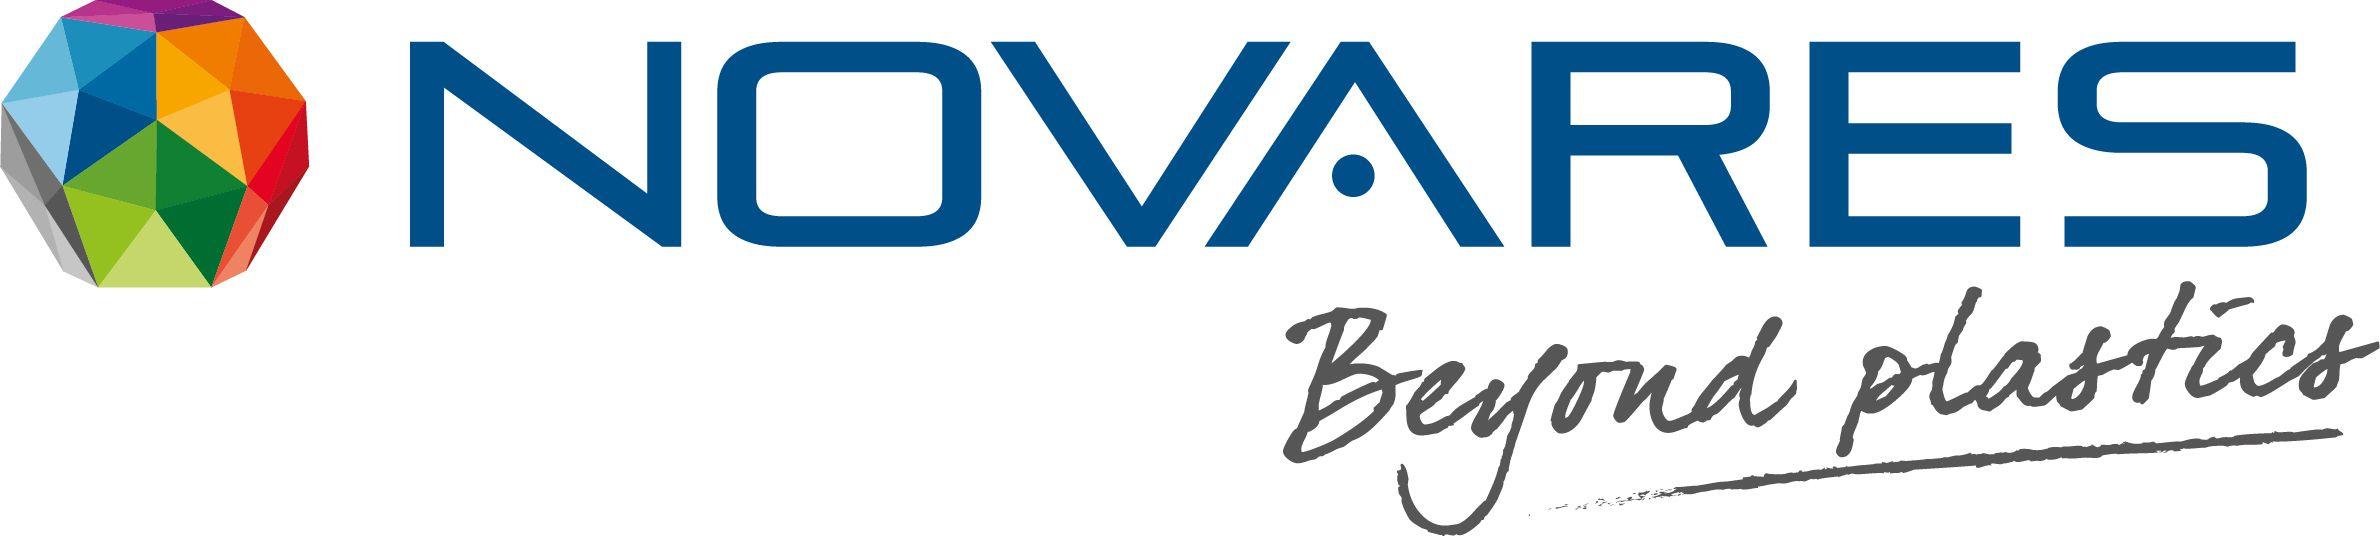 Novares Logo - JASPLASTIK components for Automotive, Electronics